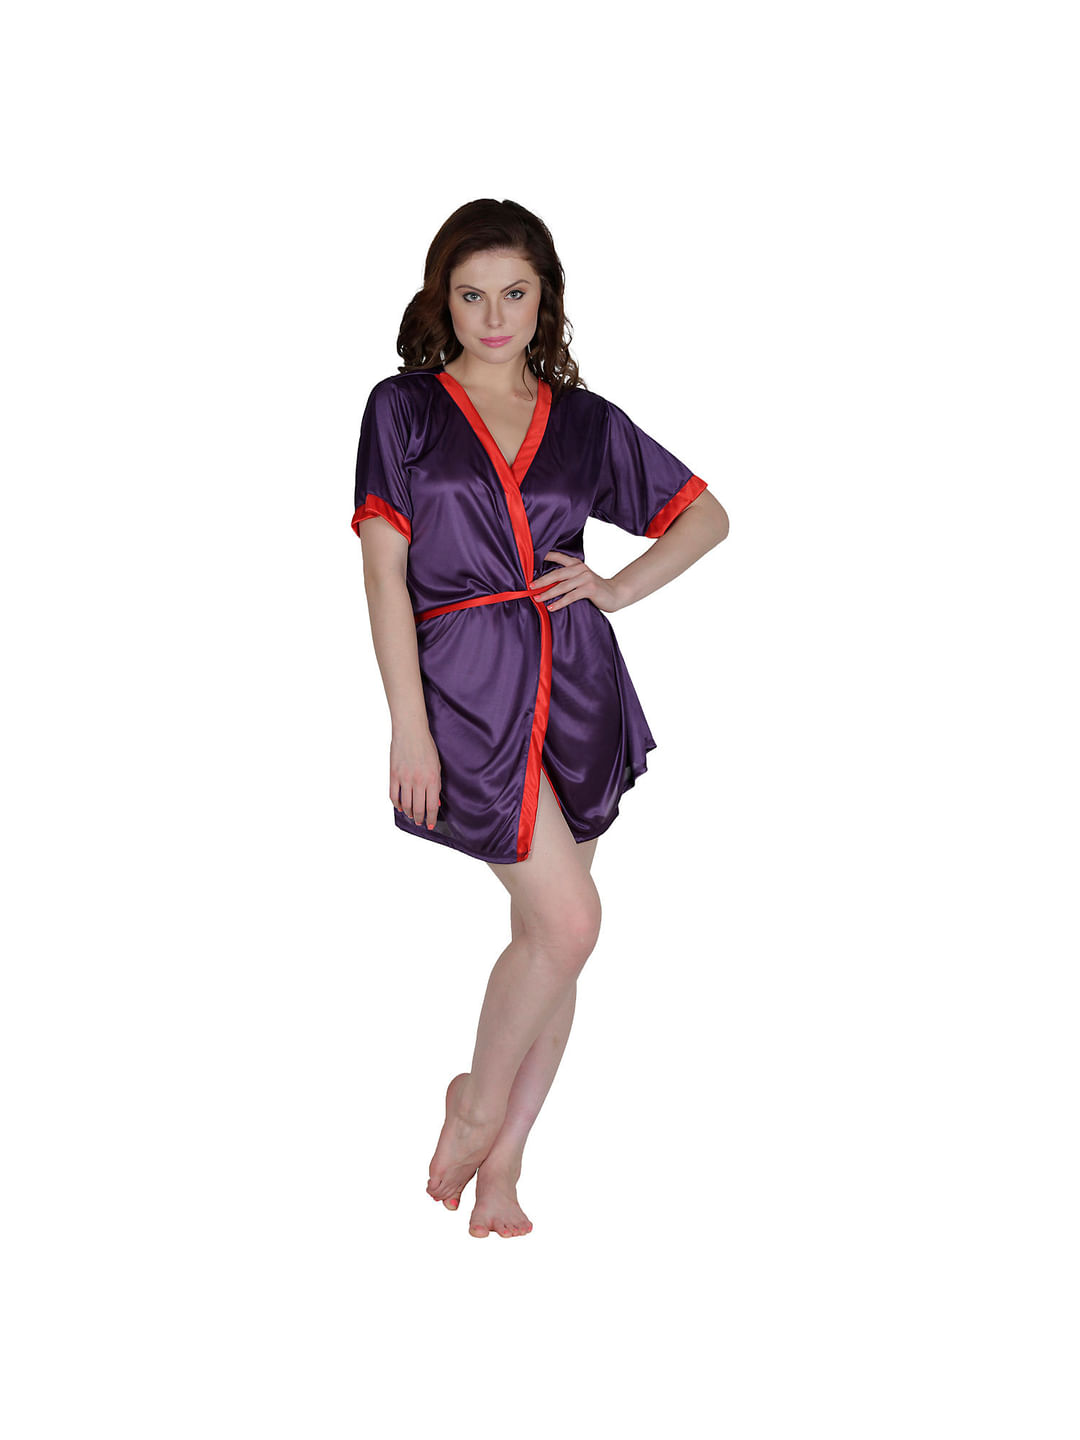 Satin Red, Purple Robe, Housecoat (Free Size, HC-55)